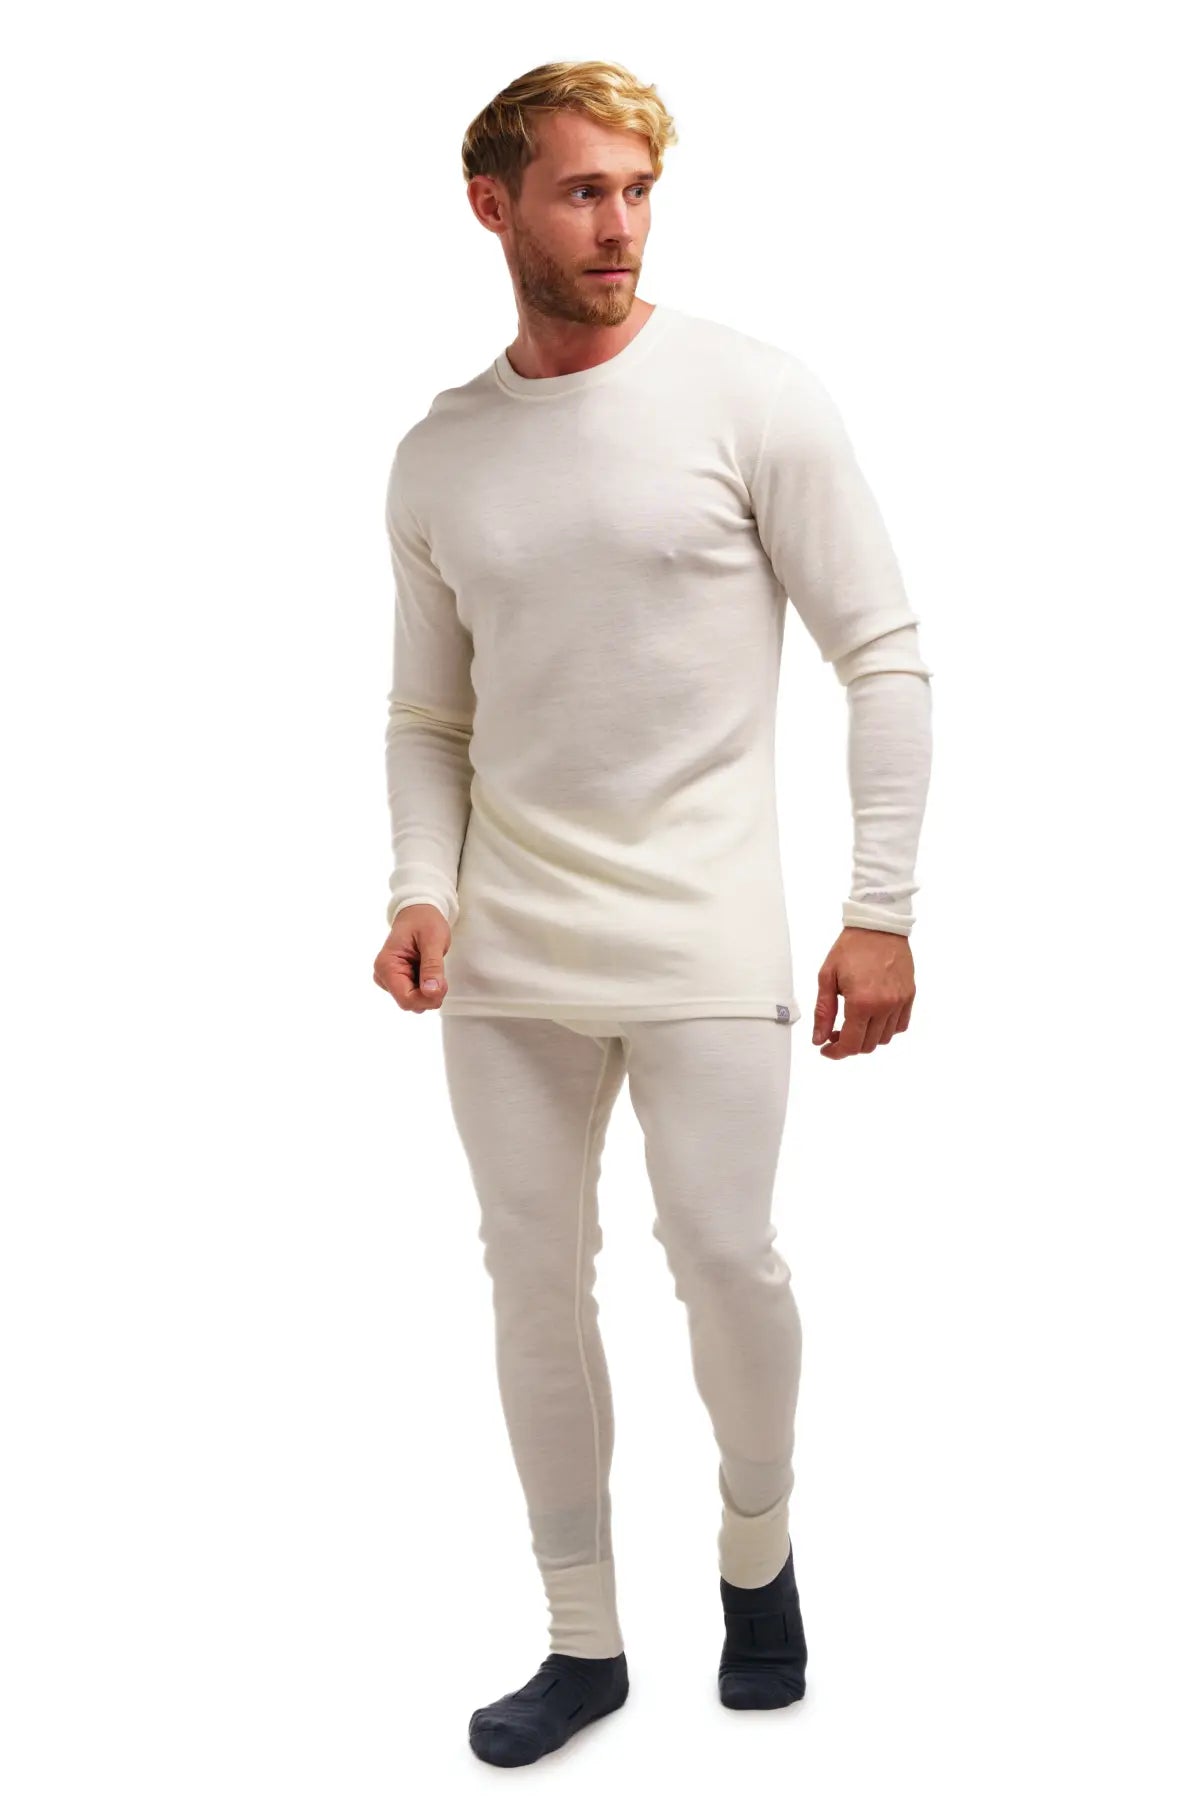  Merinotech Merino Wool Base Layer Mens Set - Midweight  Merino Wool Thermal Underwear For Men Top, Bottom